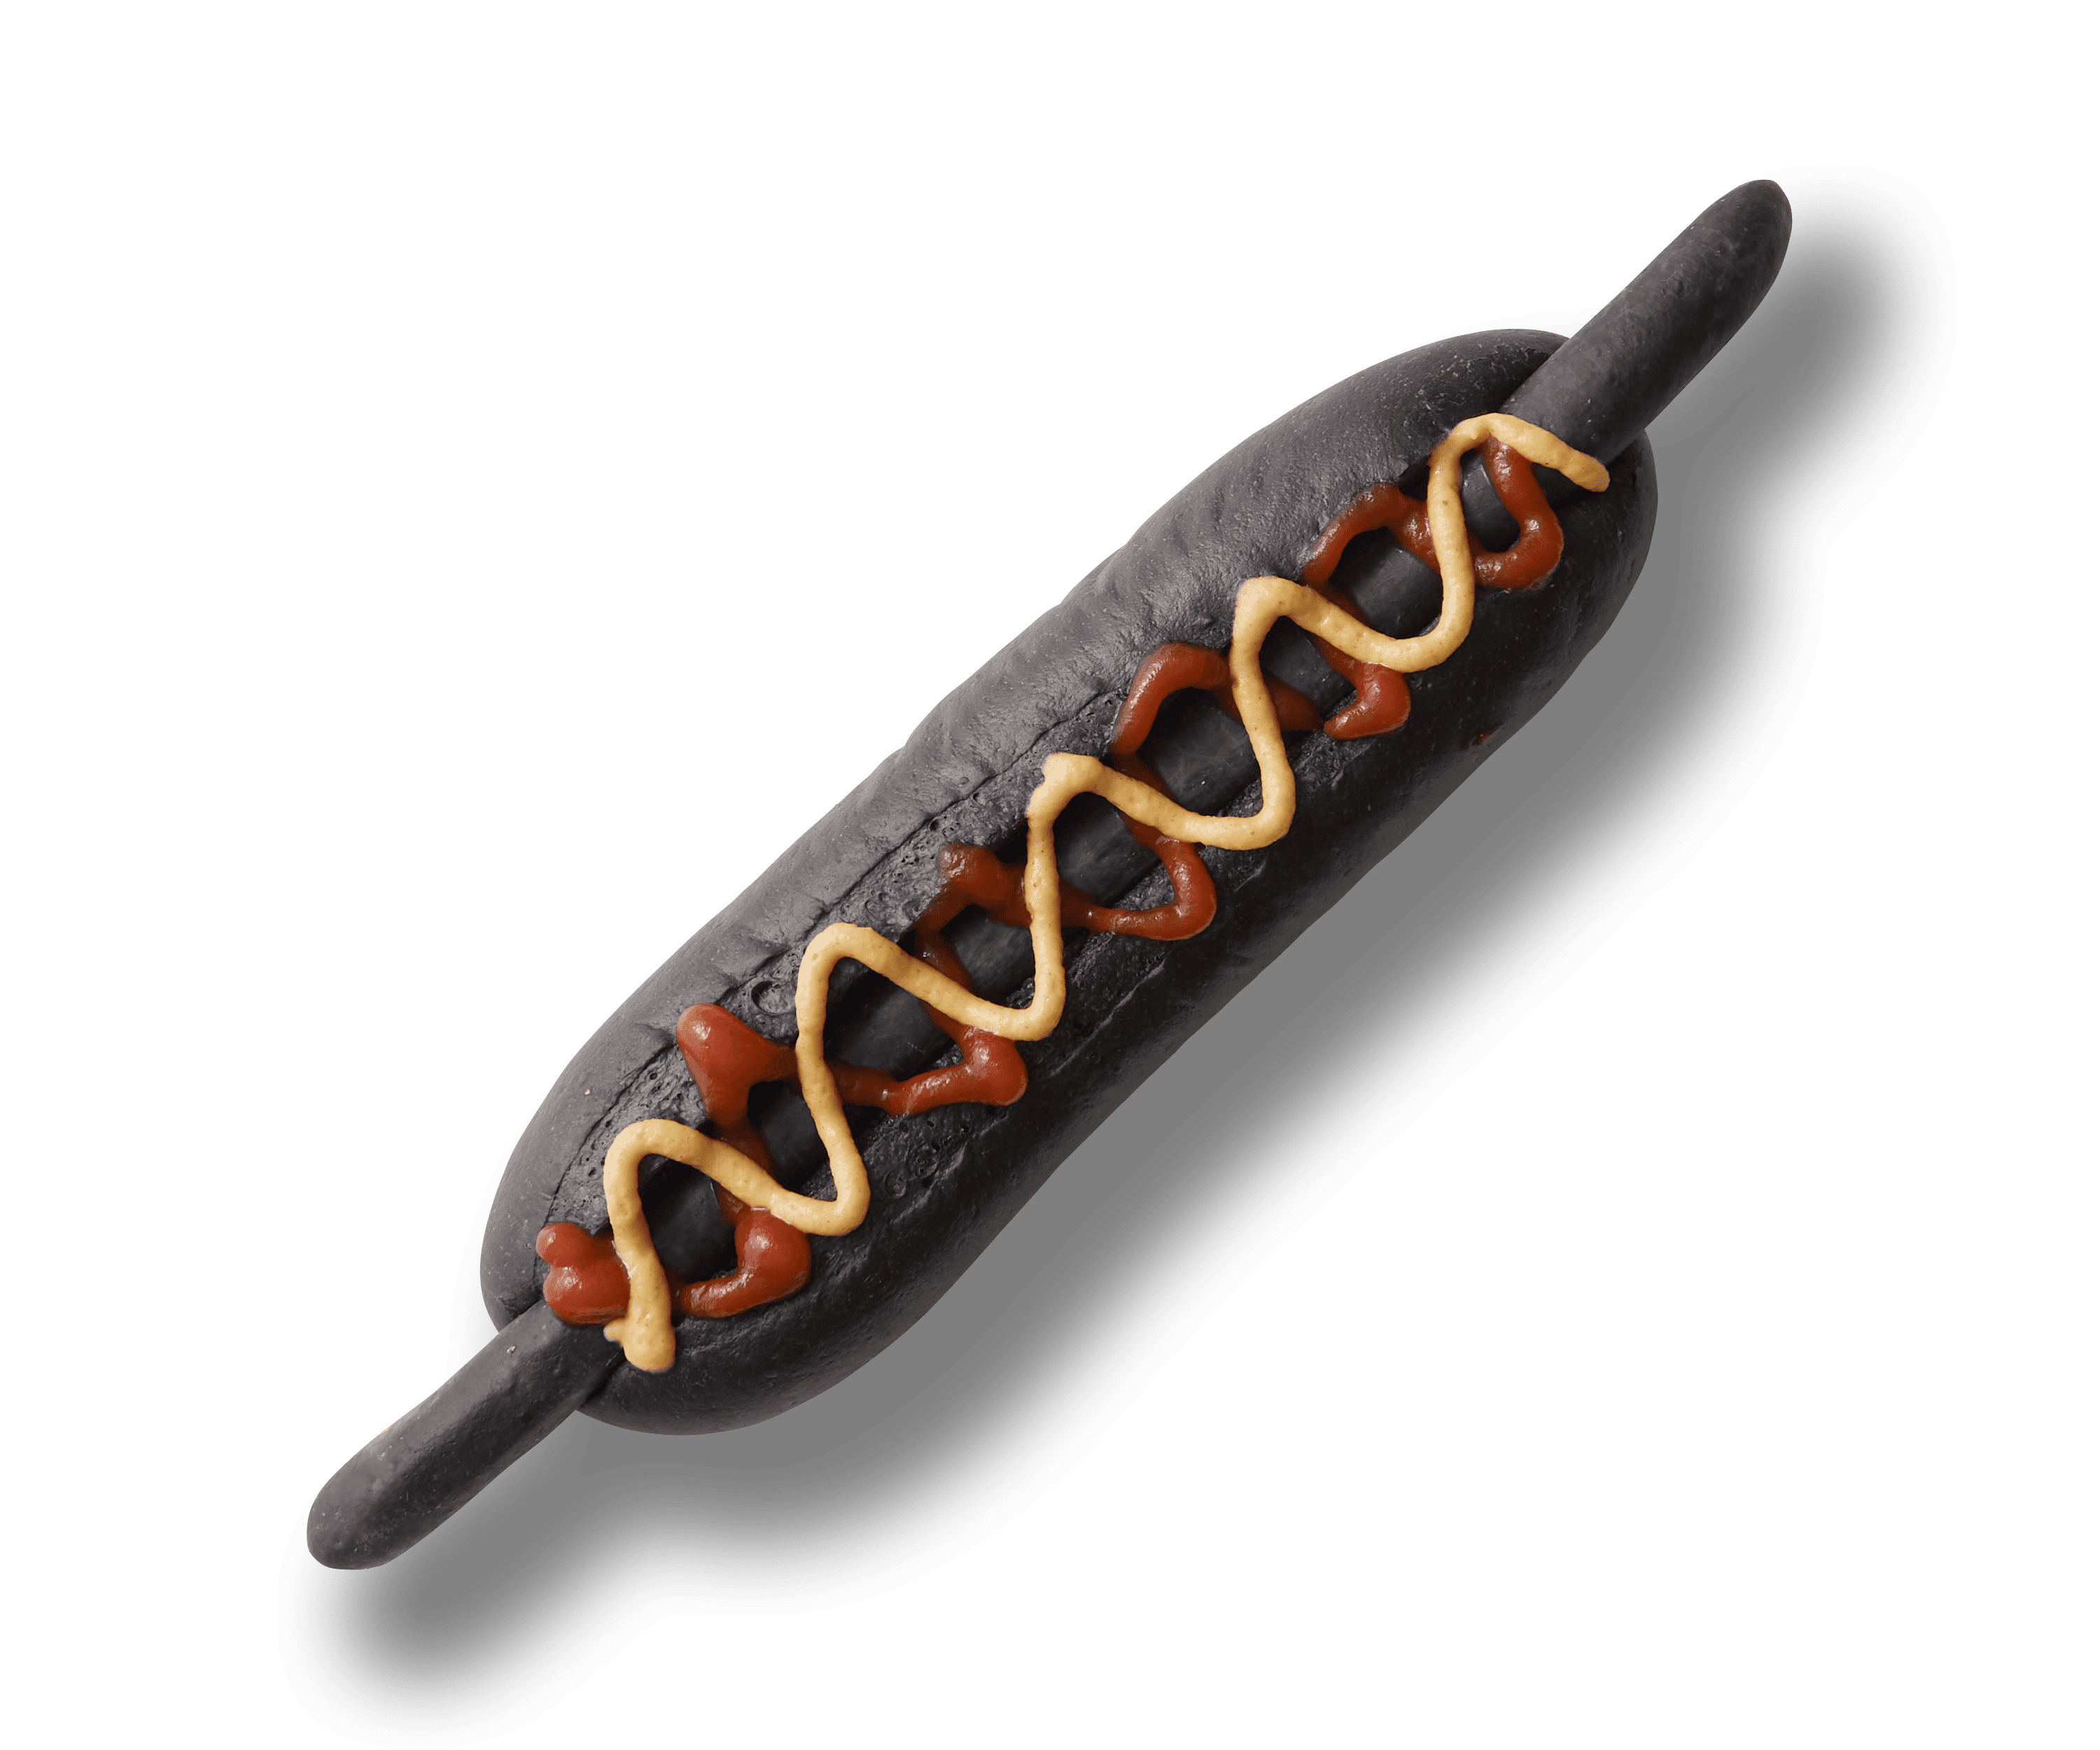 Sherlock Holmes onderdak Verplicht Ikea Japan's Halloween menu has black hotdogs, eyeball doughnuts and more